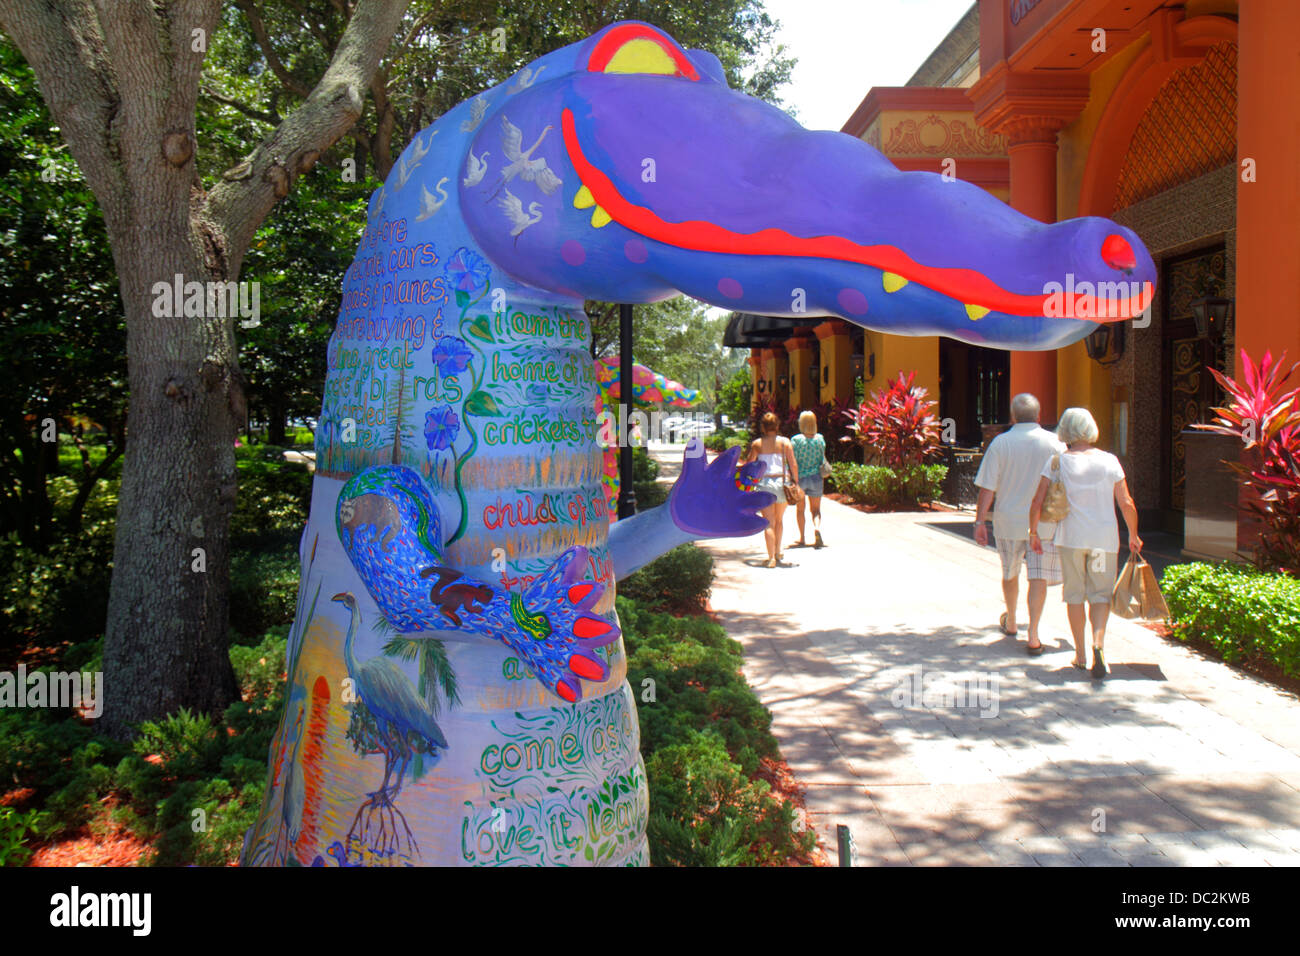 Mediabakery - Photo by Age Fotostock - Florida, Fort Ft Lauderdale,  Sunrise, Sawgrass Mills Mall, entrance, sign, alligator